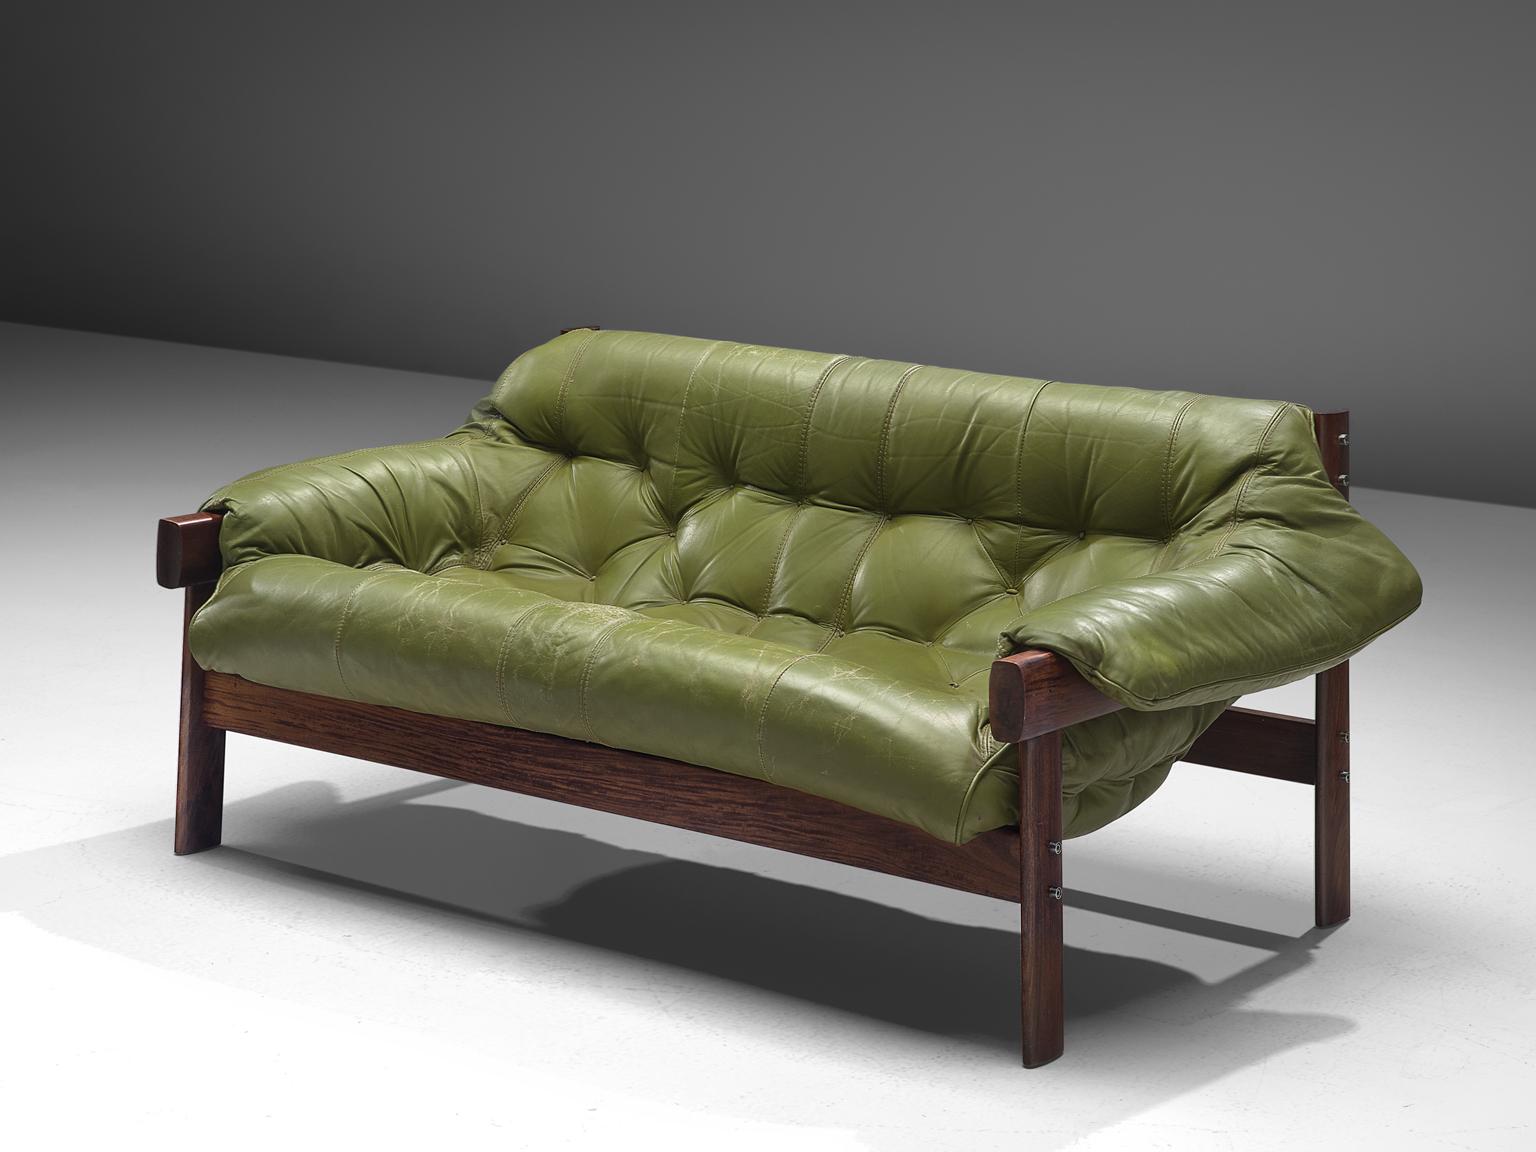 Percival Lafer Brasilianisches Sofa mit grünem Leder (Moderne der Mitte des Jahrhunderts)